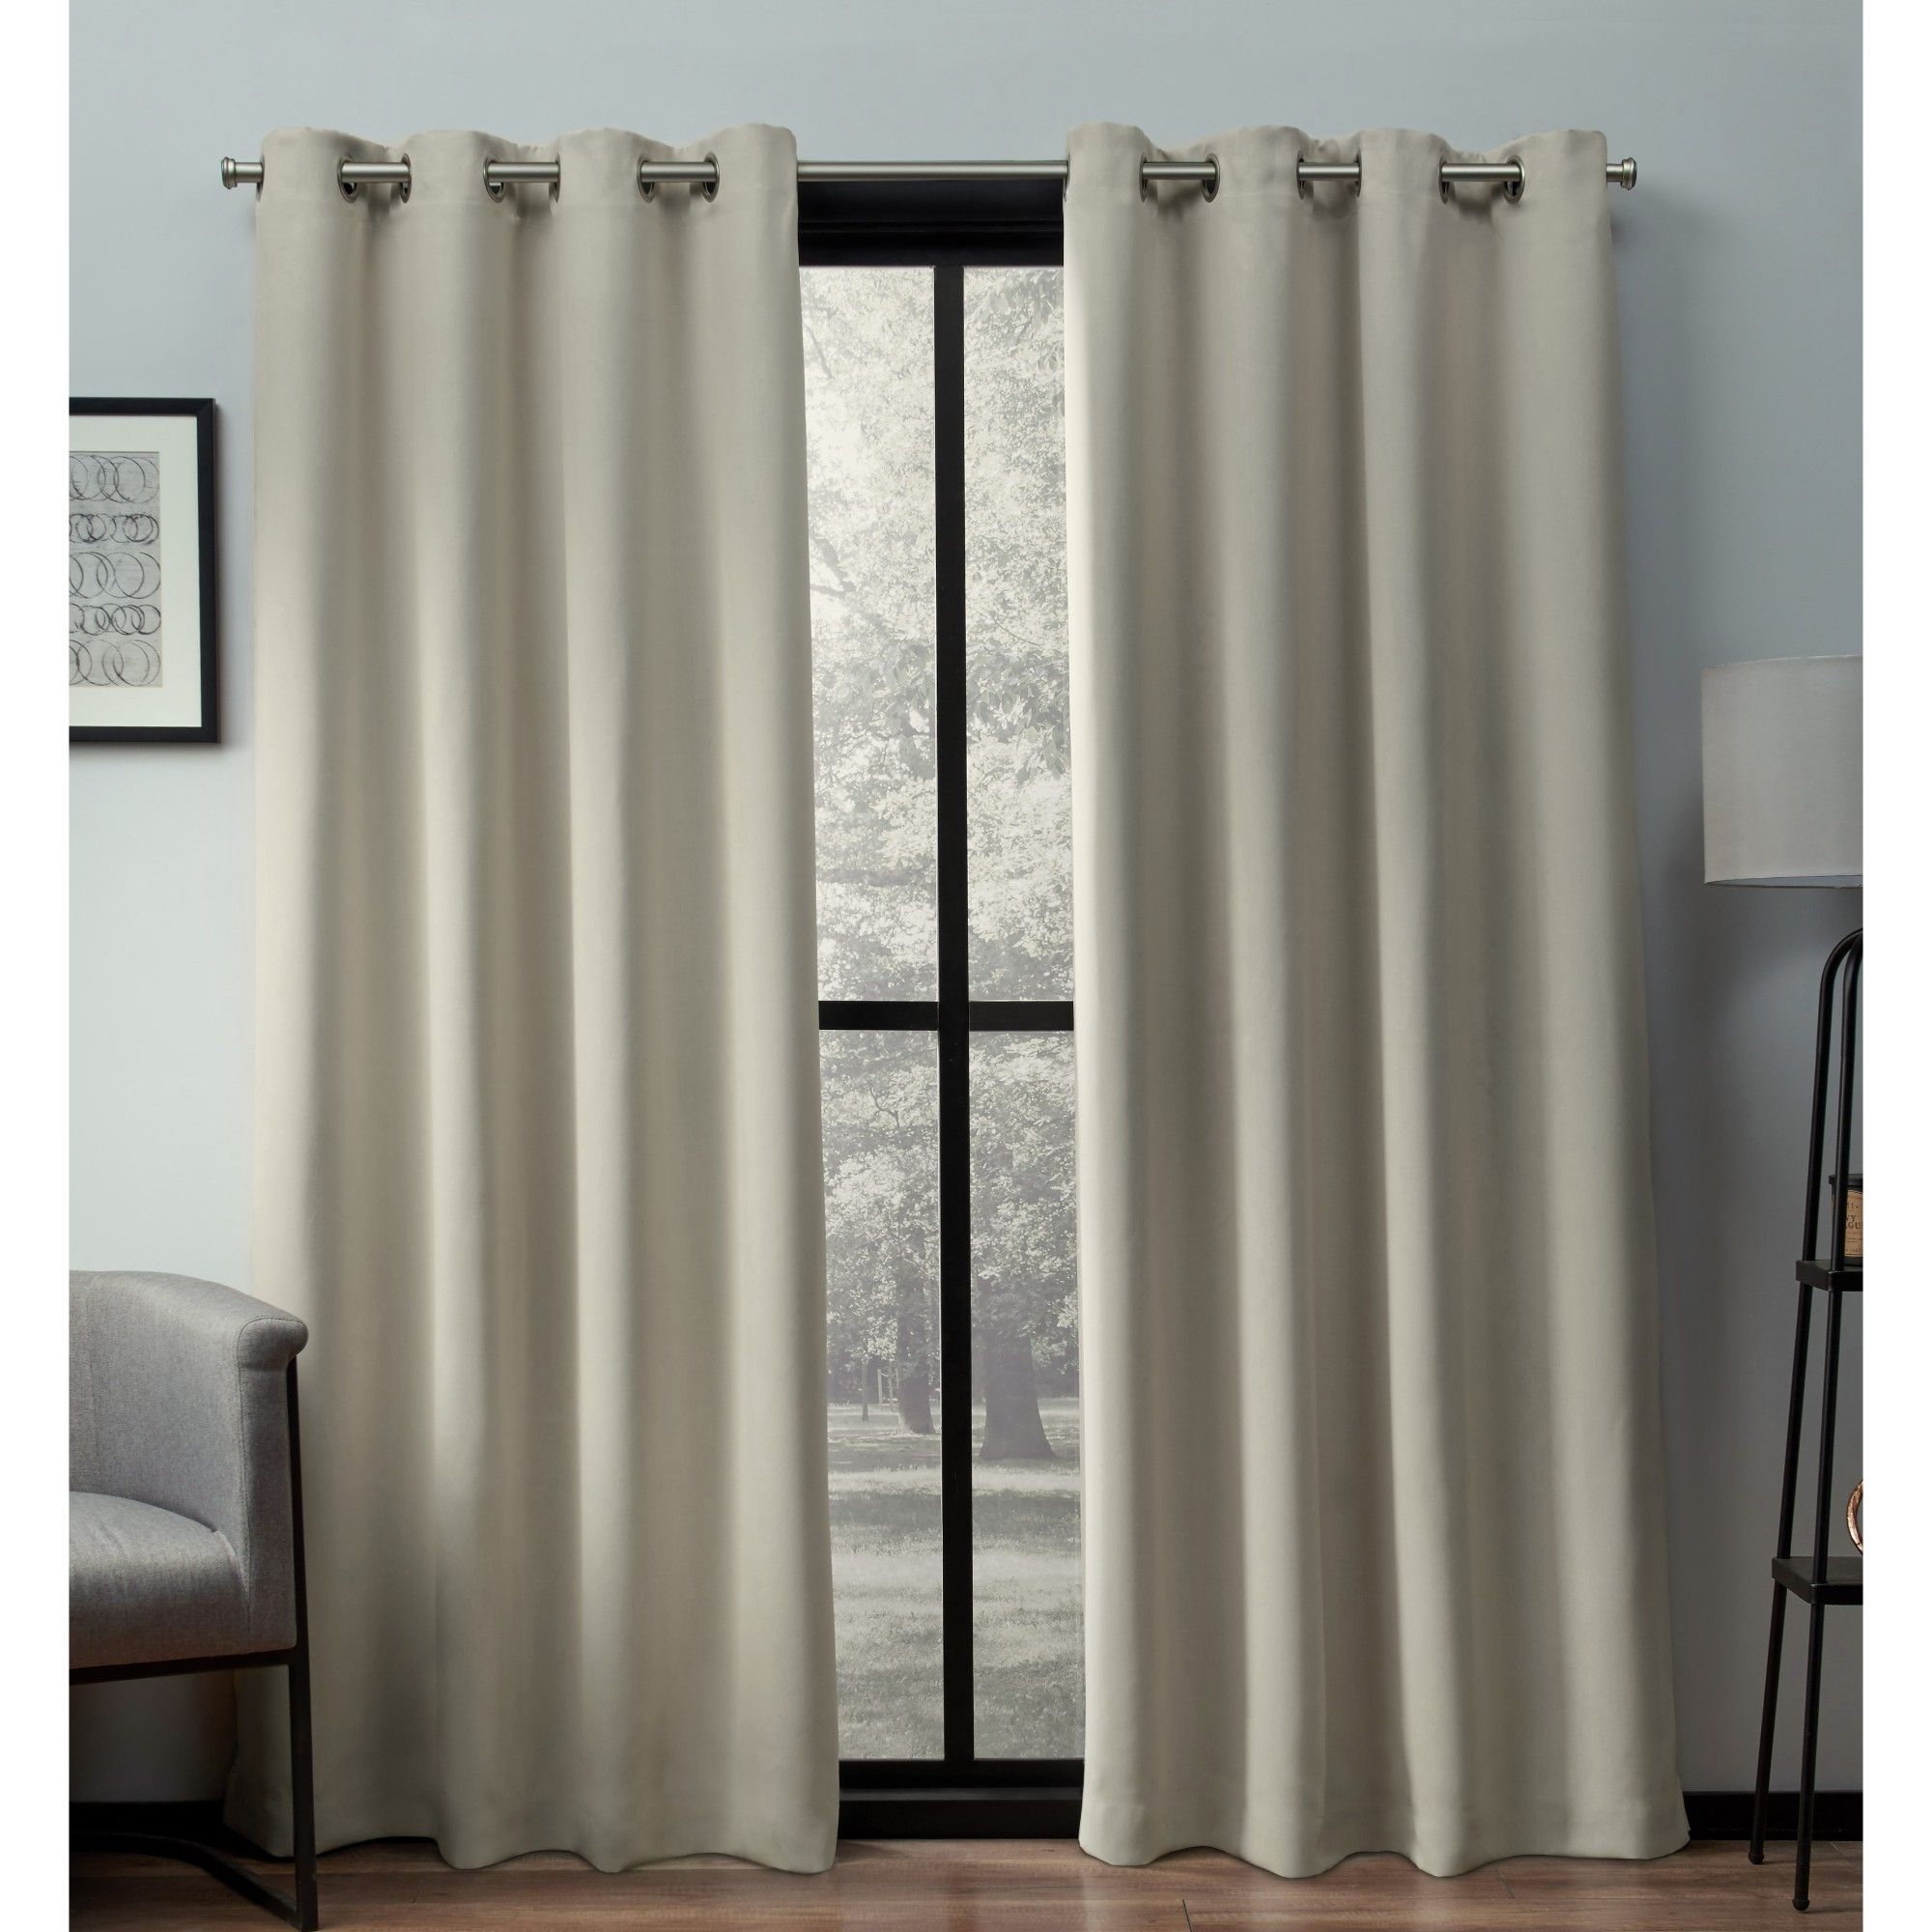 Heath Textured Linen Woven Room Darkening Grommet Top Window Intended For Thermal Textured Linen Grommet Top Curtain Panel Pairs (View 17 of 30)